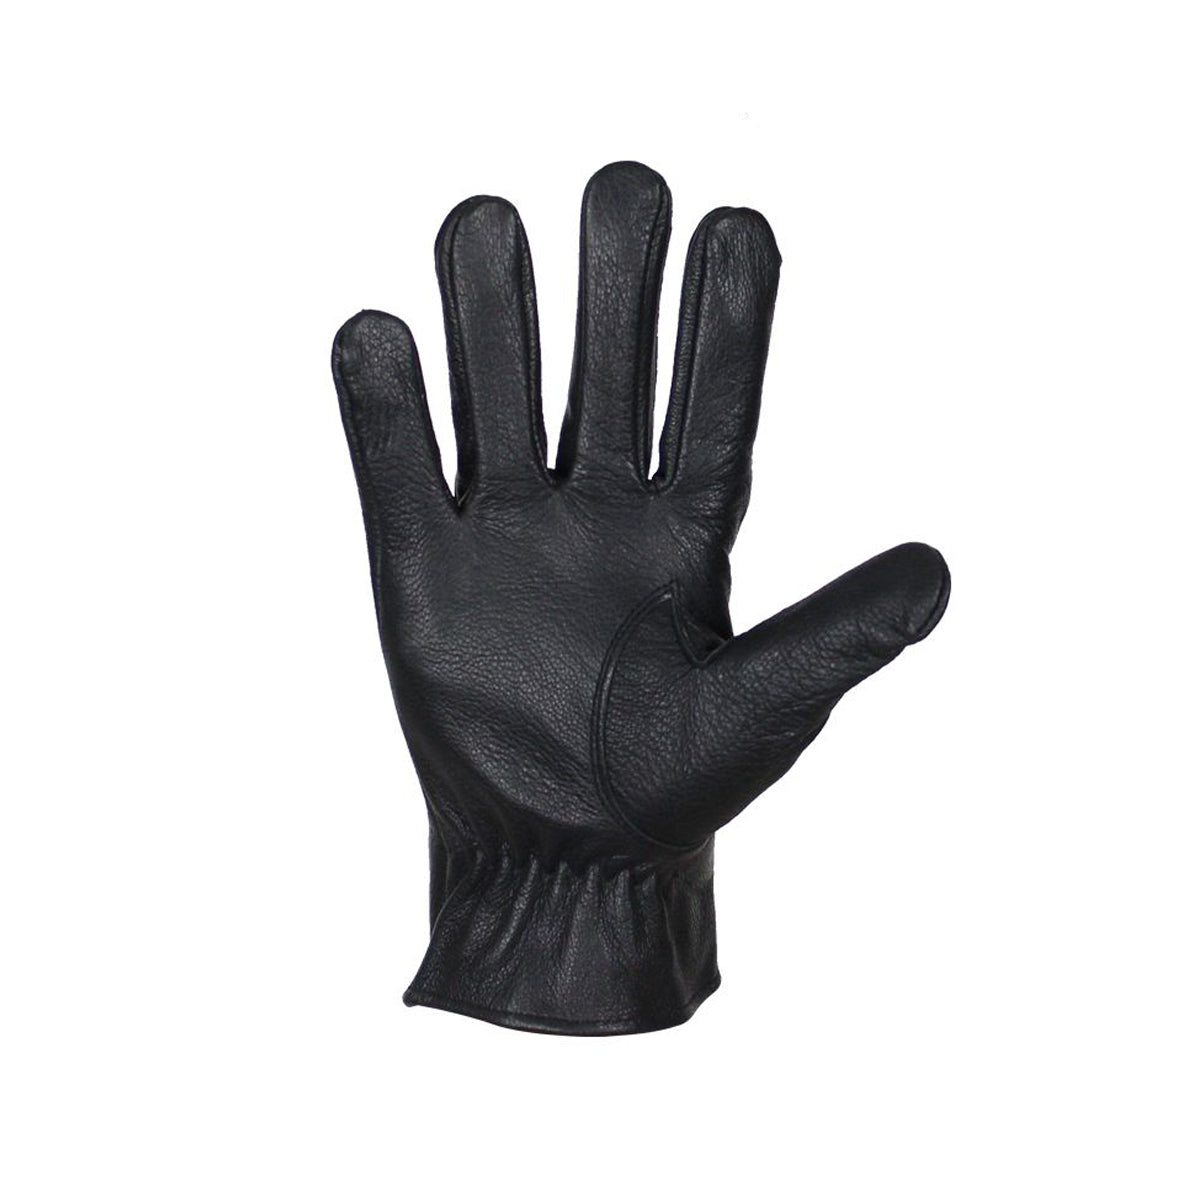 Deer Skin Leather Gloves W/ Zipper - Black